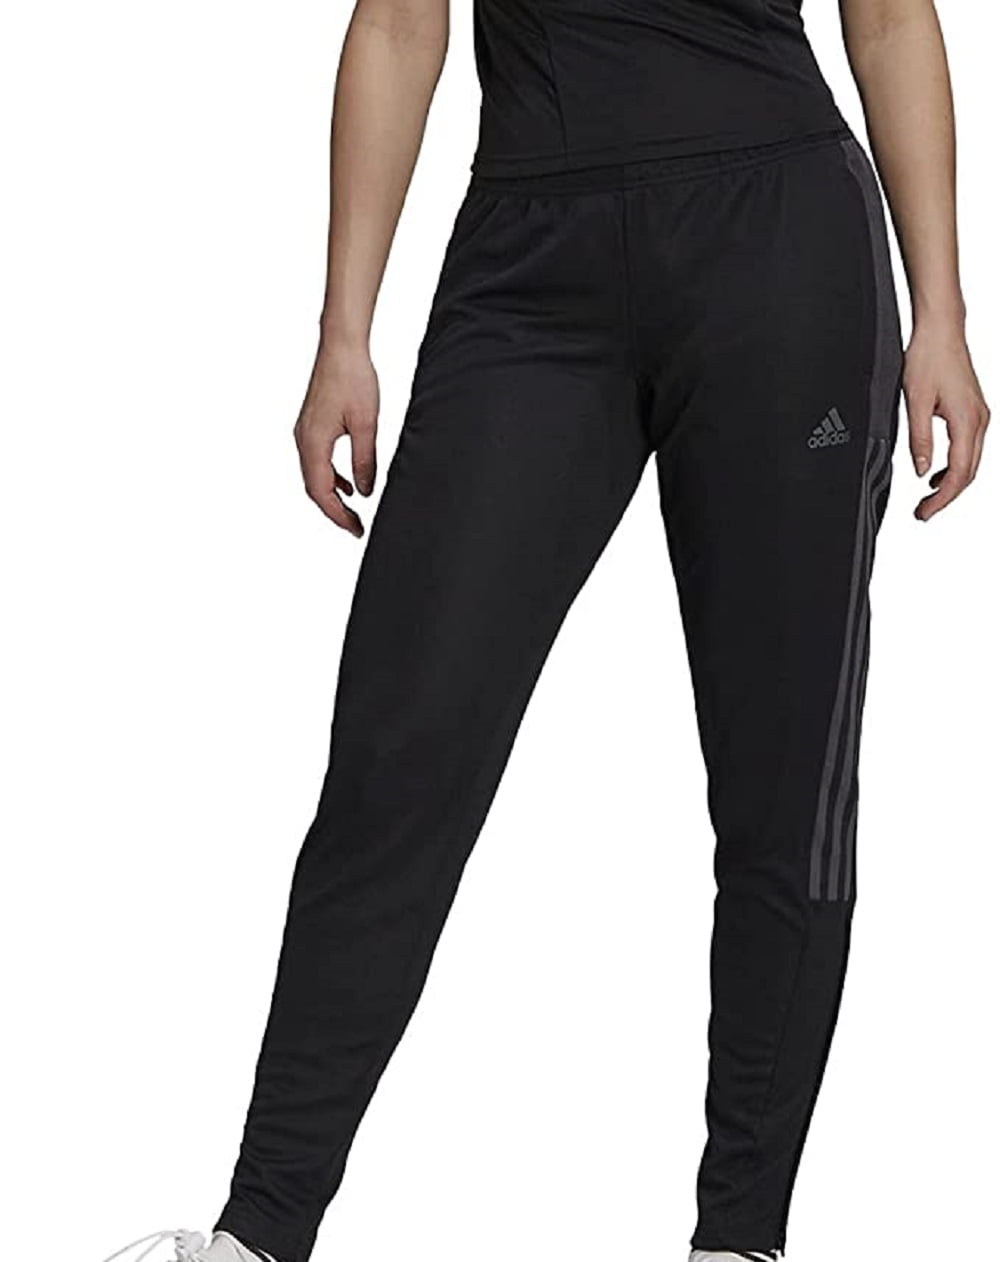 Adidas Women's Tiro Track Pants, Black/Dark Grey Heather, - Walmart.com